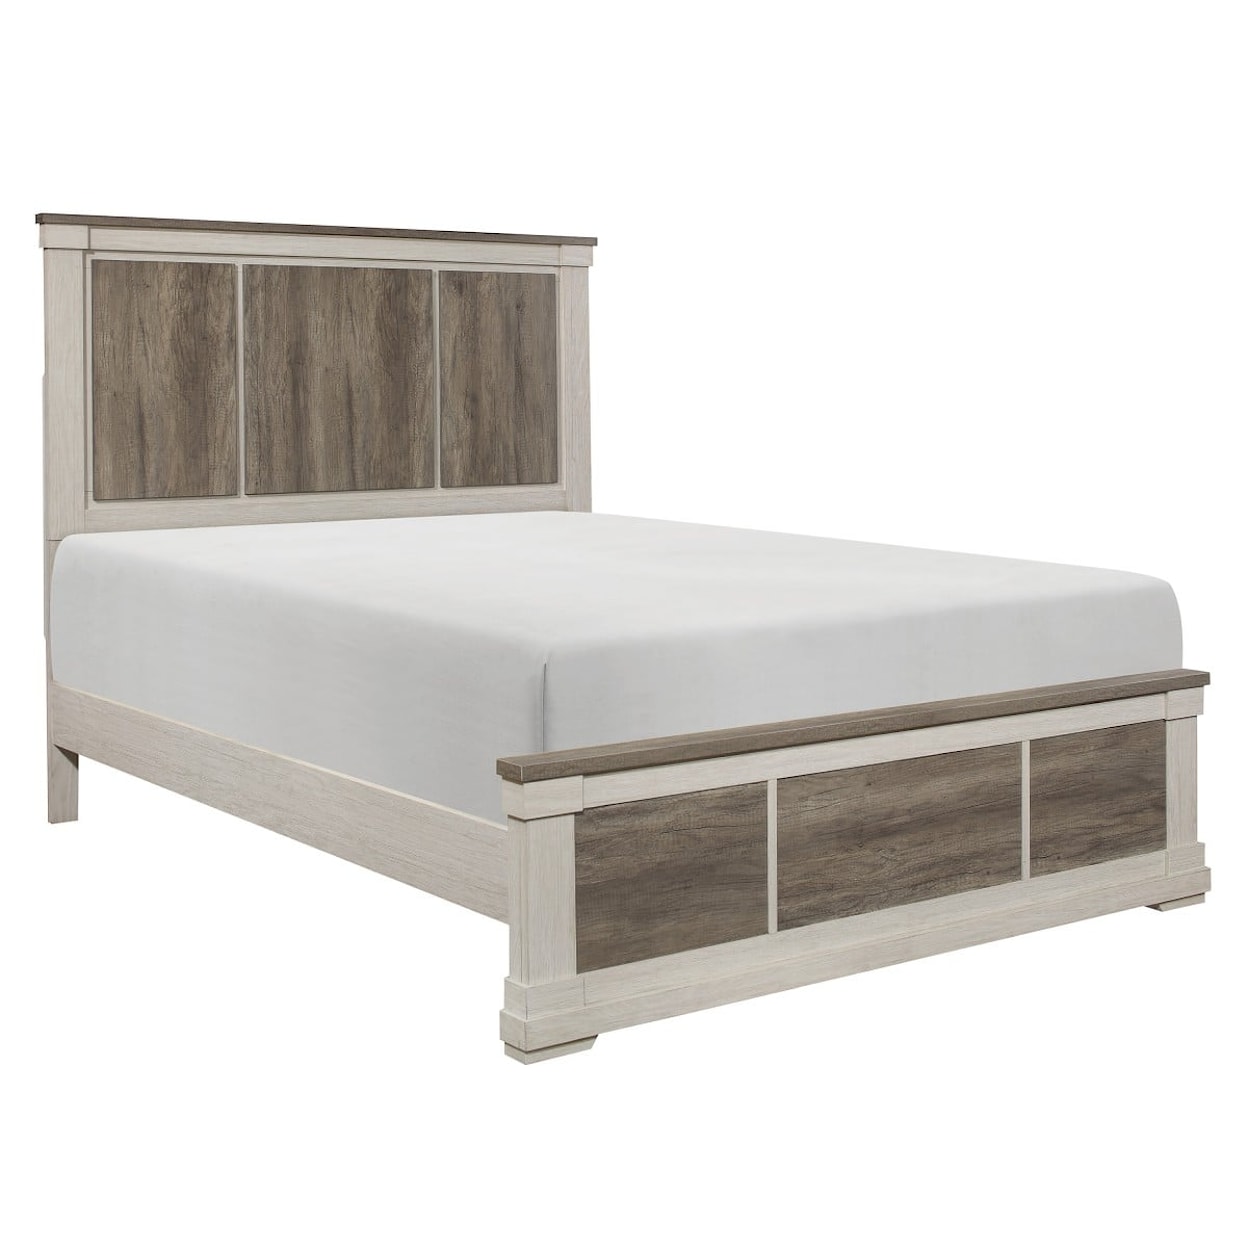 Homelegance Furniture Arcadia Full Bed